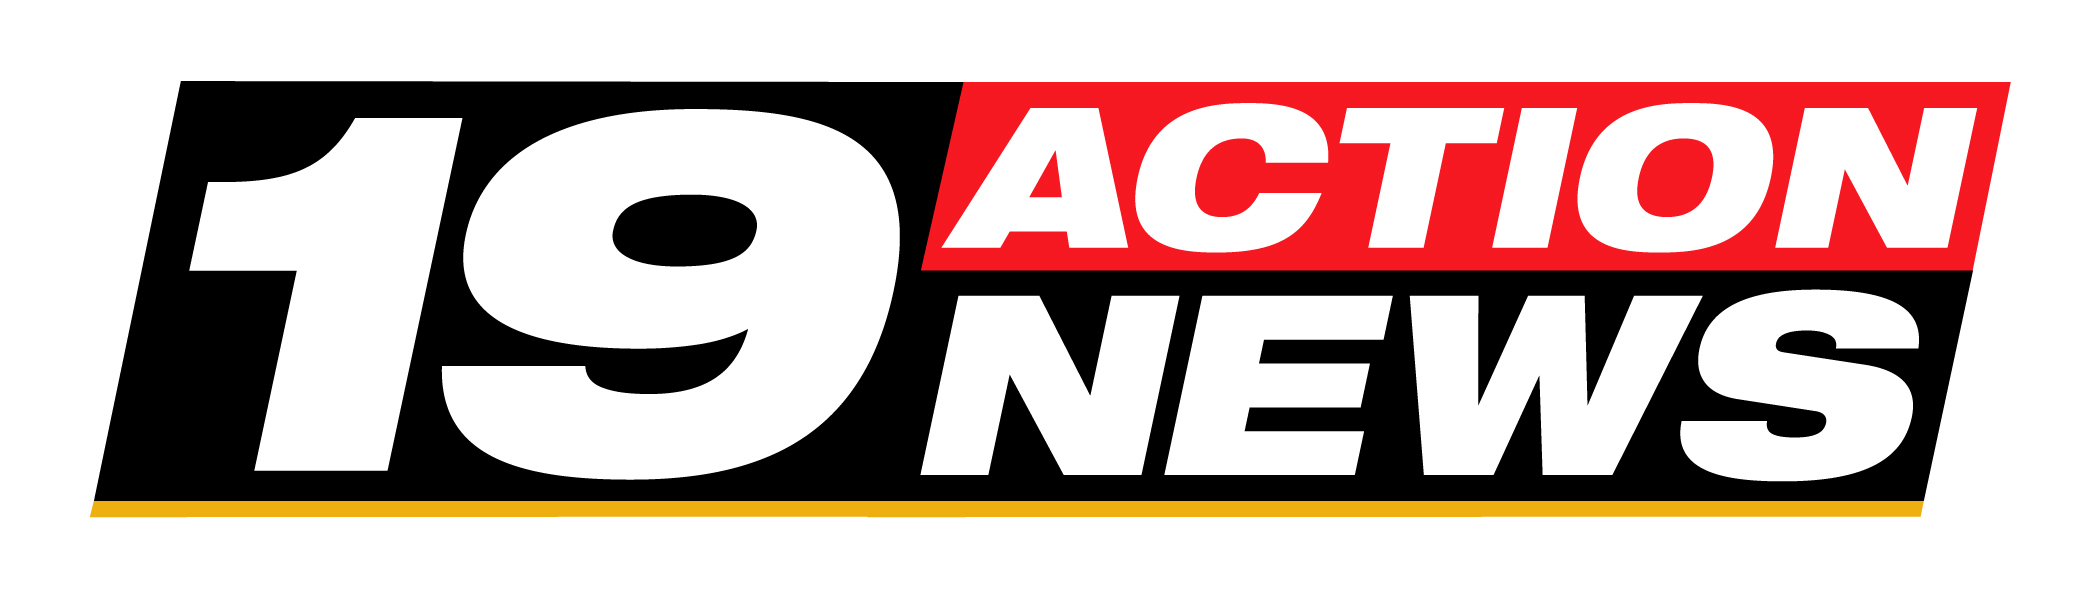 19 Action News Logo photo - 1